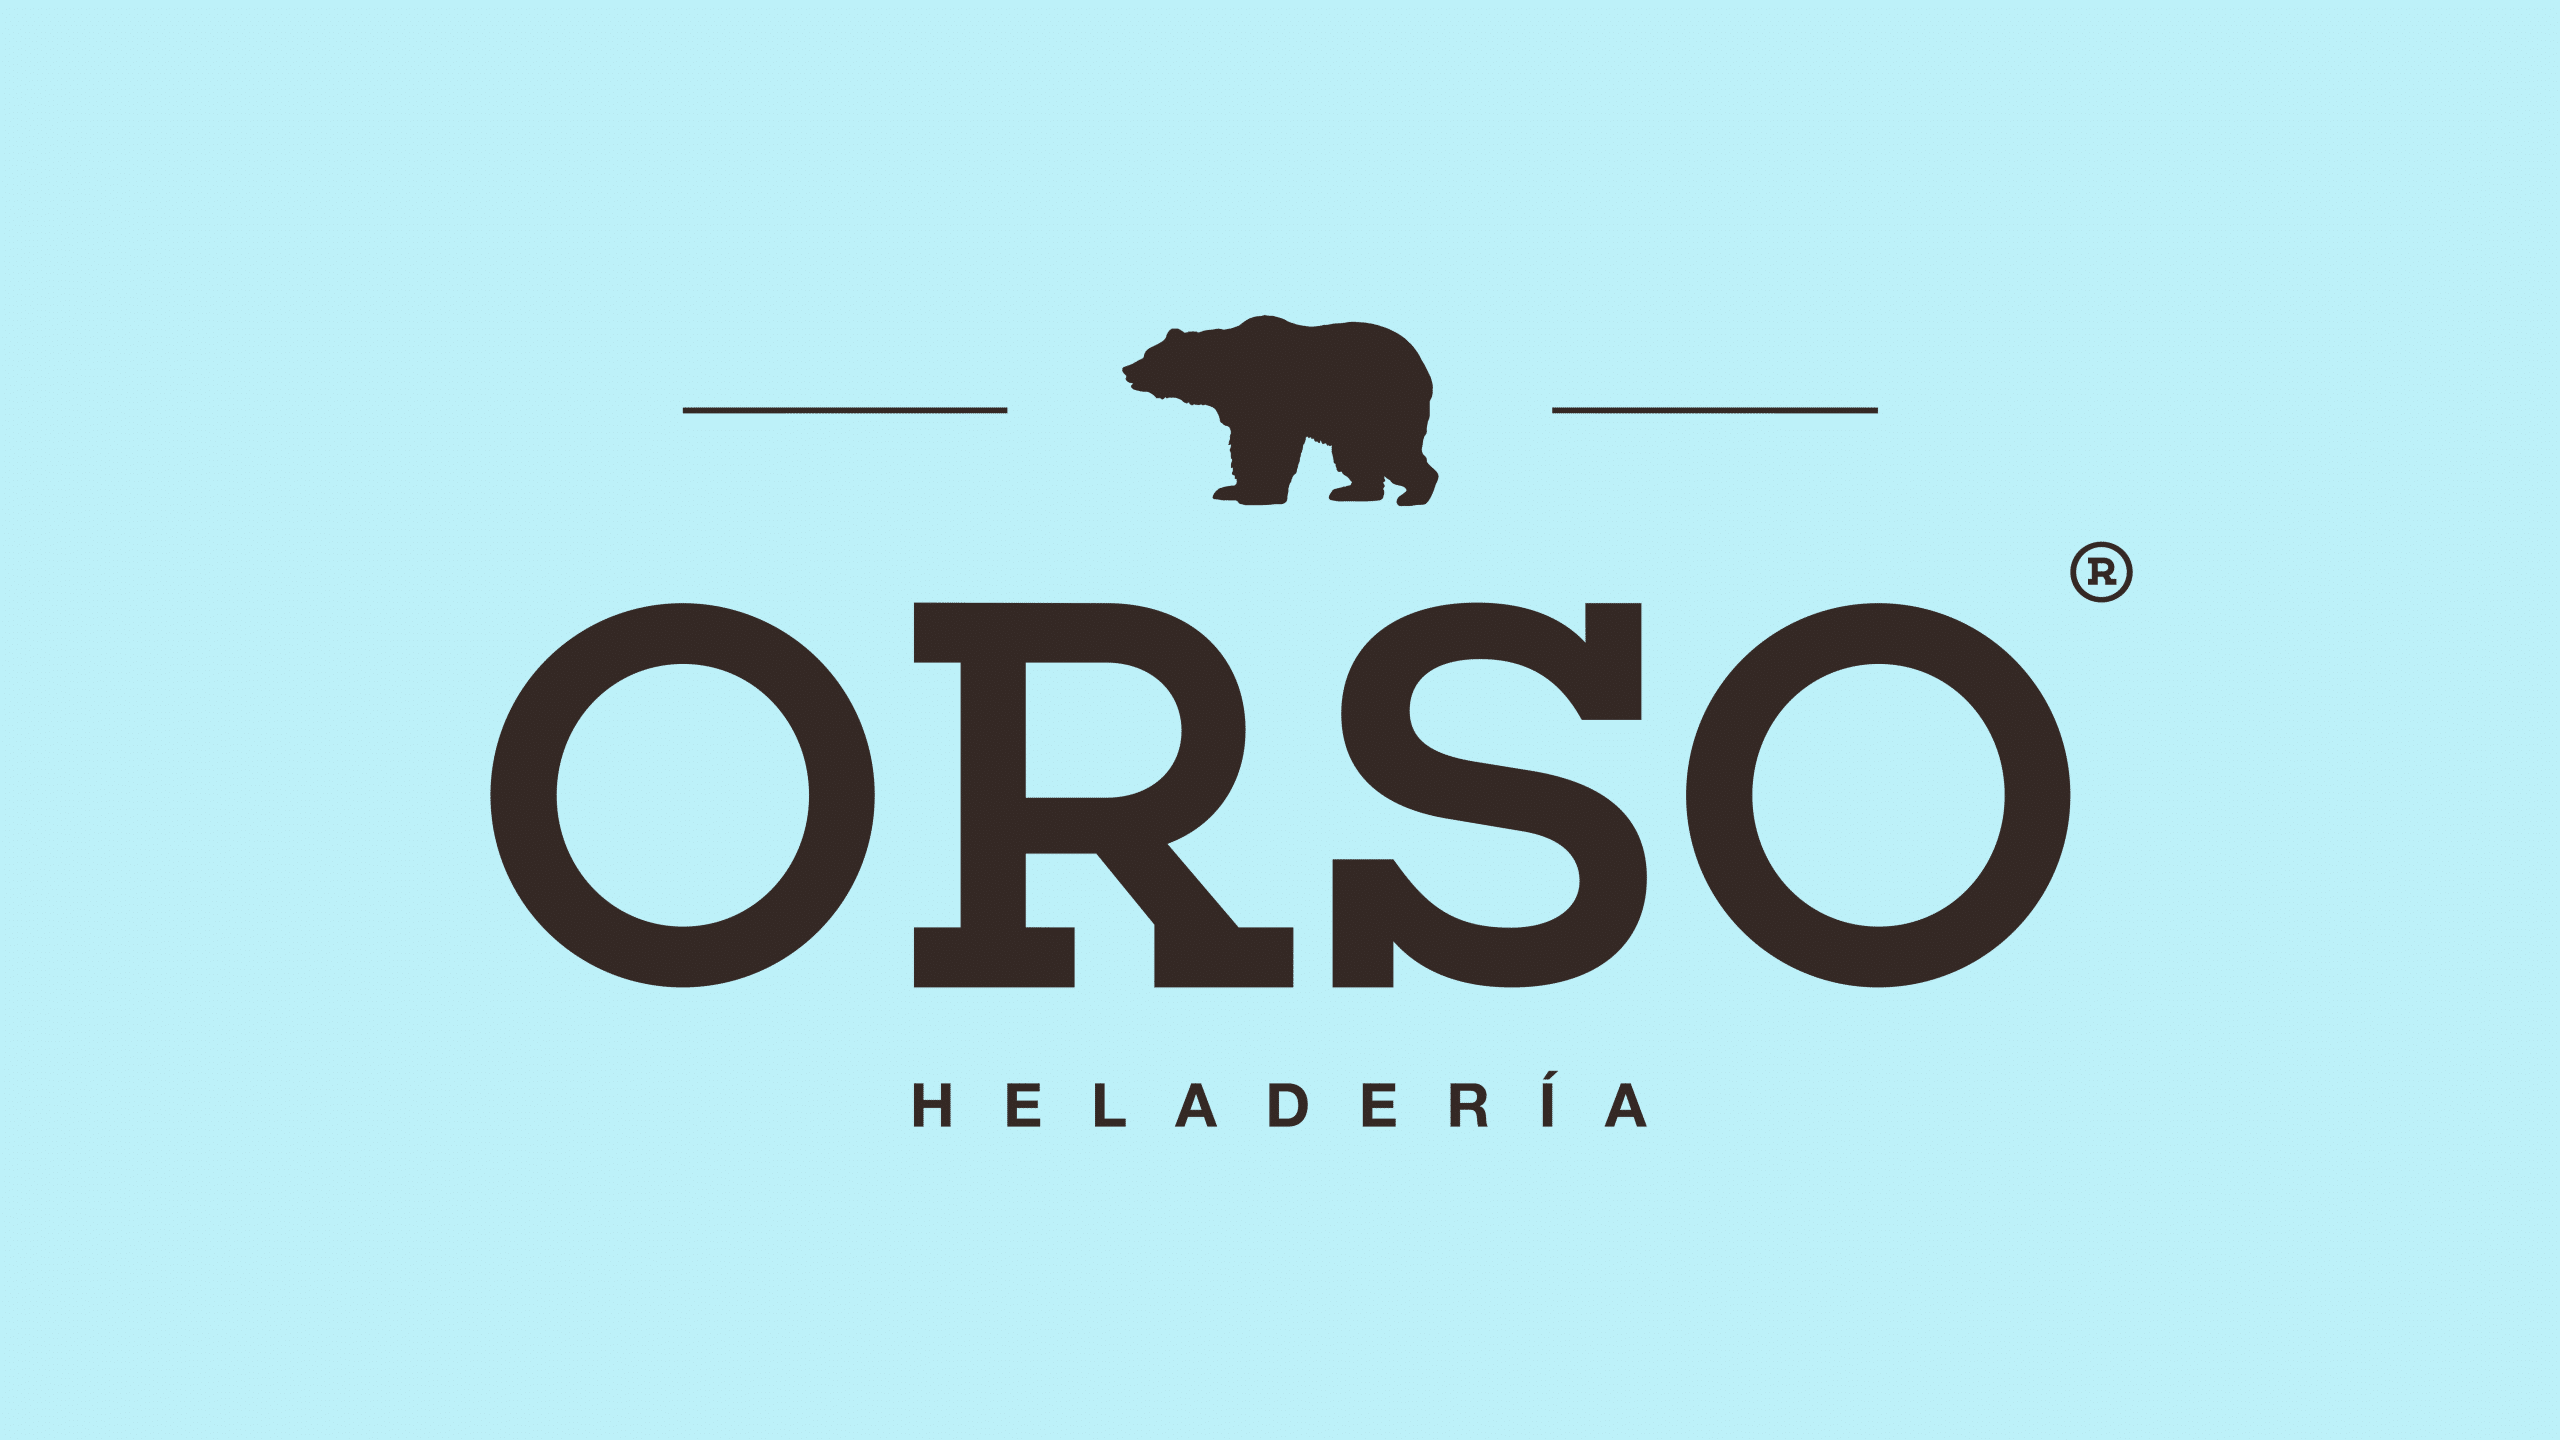 Logo de heladería Orso